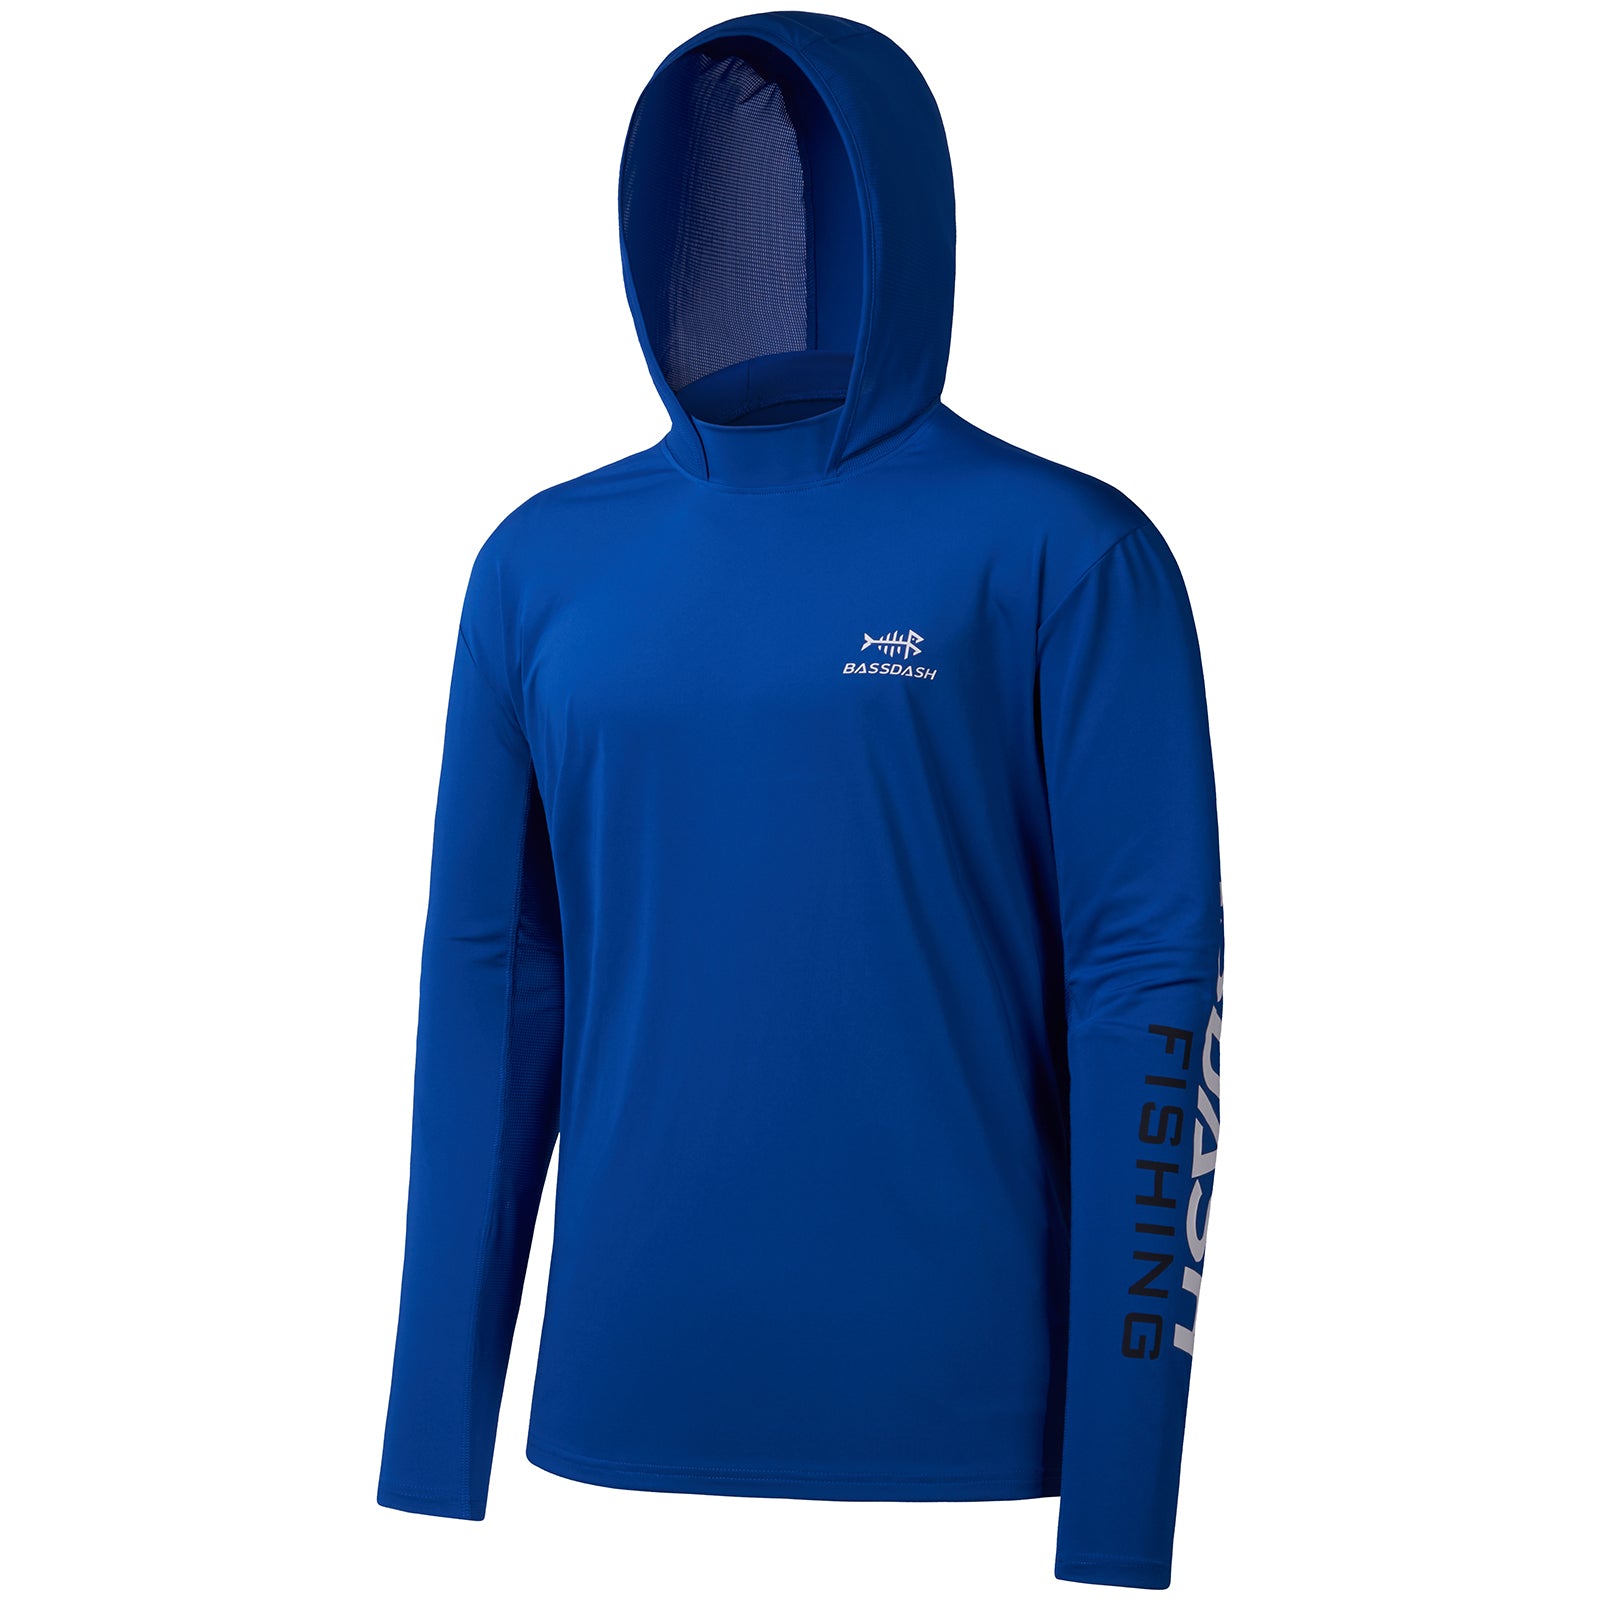 Bassdash UPF 50+ Fishing Hooded Shirt For Men Sun Protection Long Sleeve Performance Hiking Climbing Shirt, Royal Blue/White Logo / 4XL